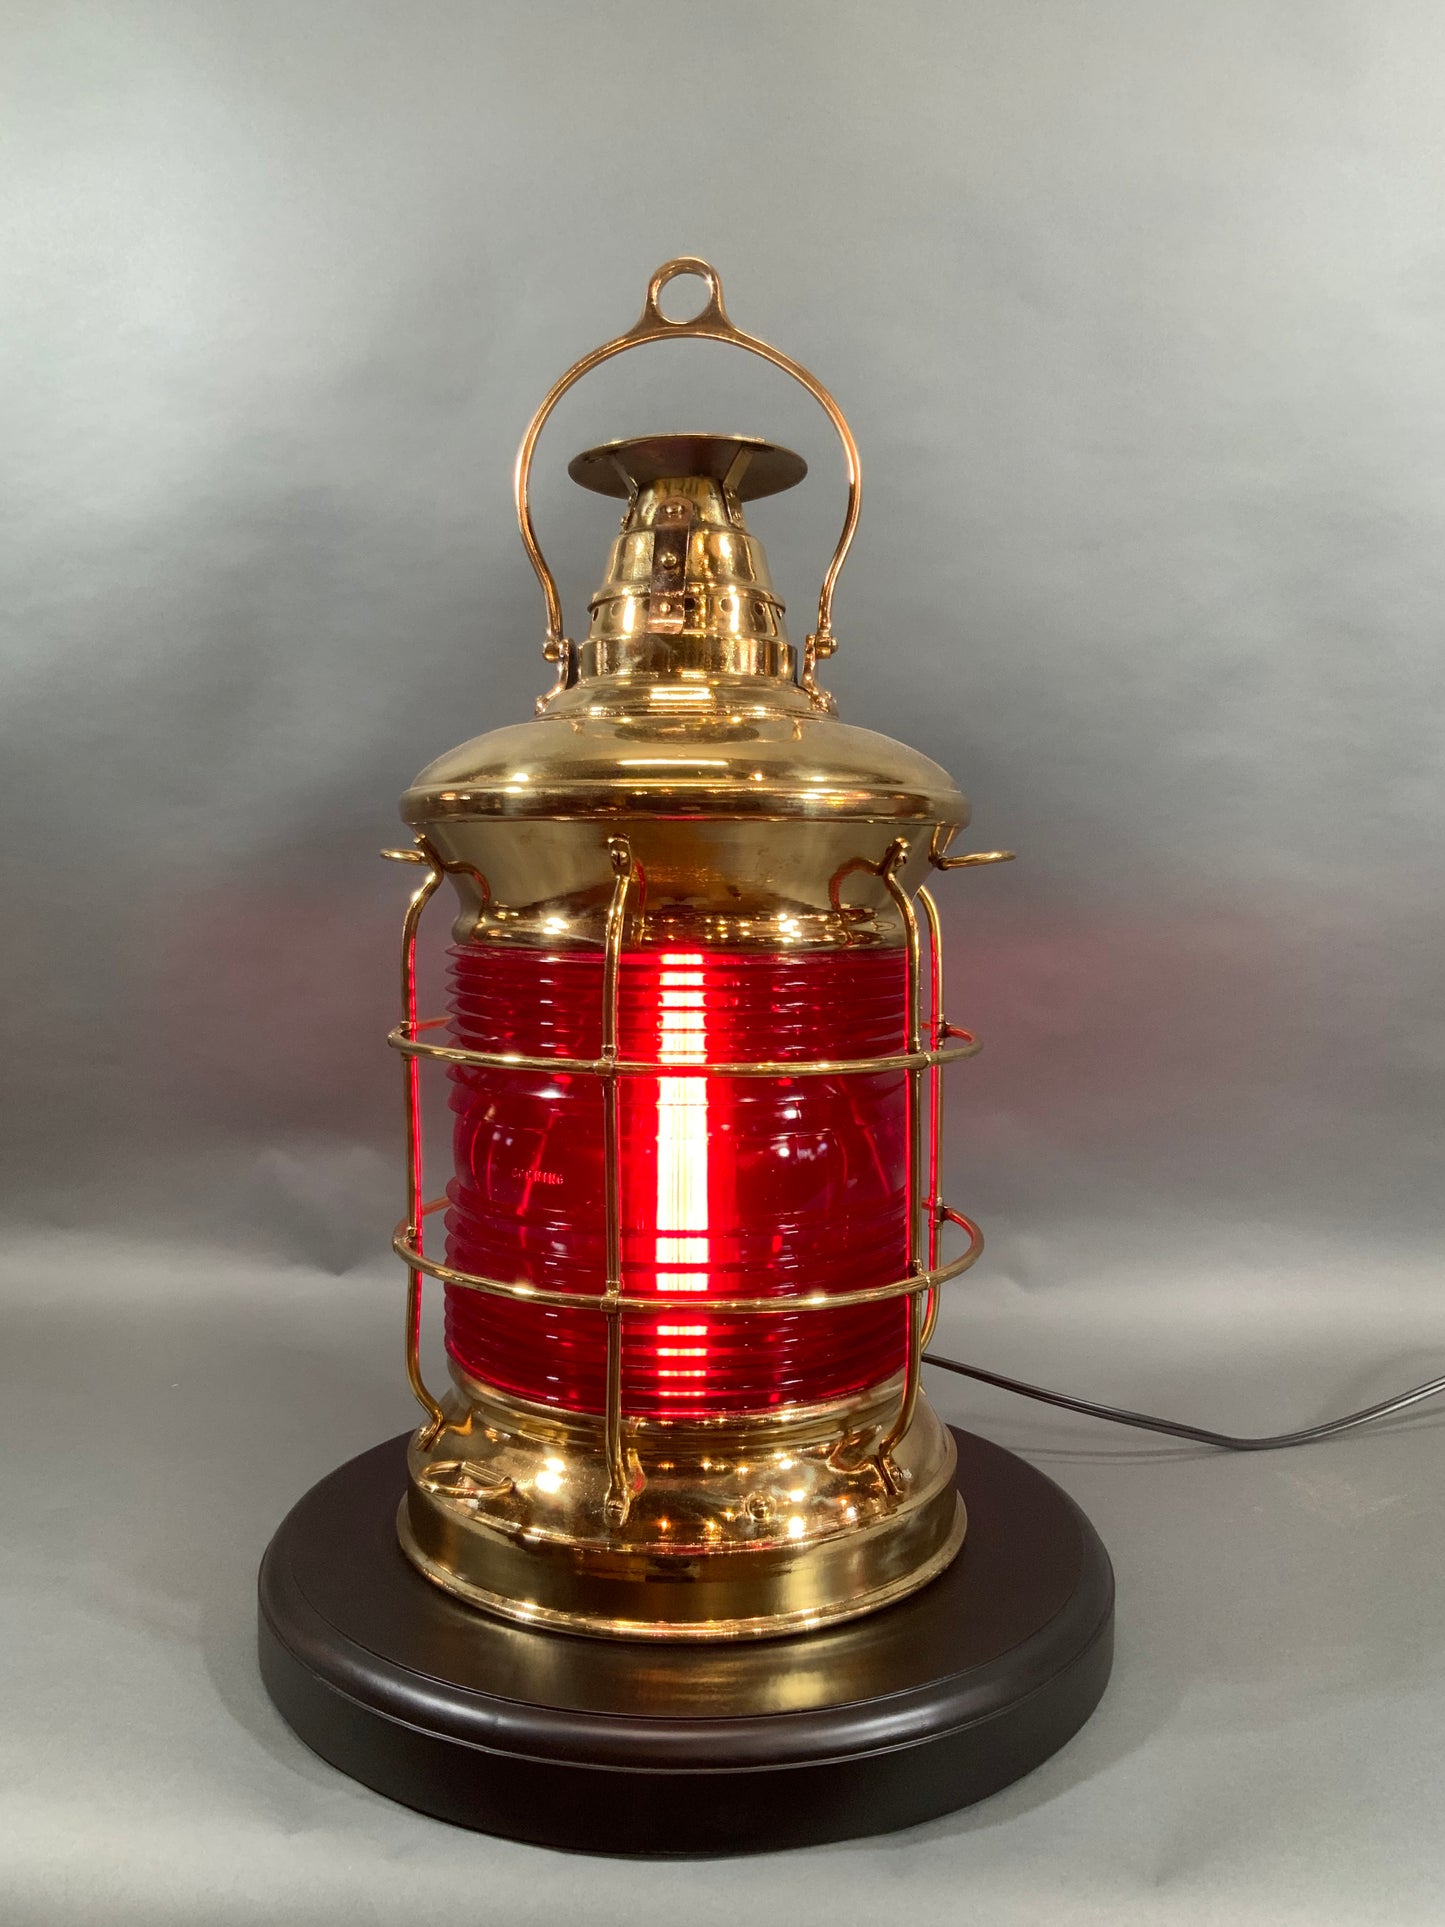 Solid Brass Ship's Lantern by F.H. Lovell Co. of Arlington, New Jersey - Lannan Gallery